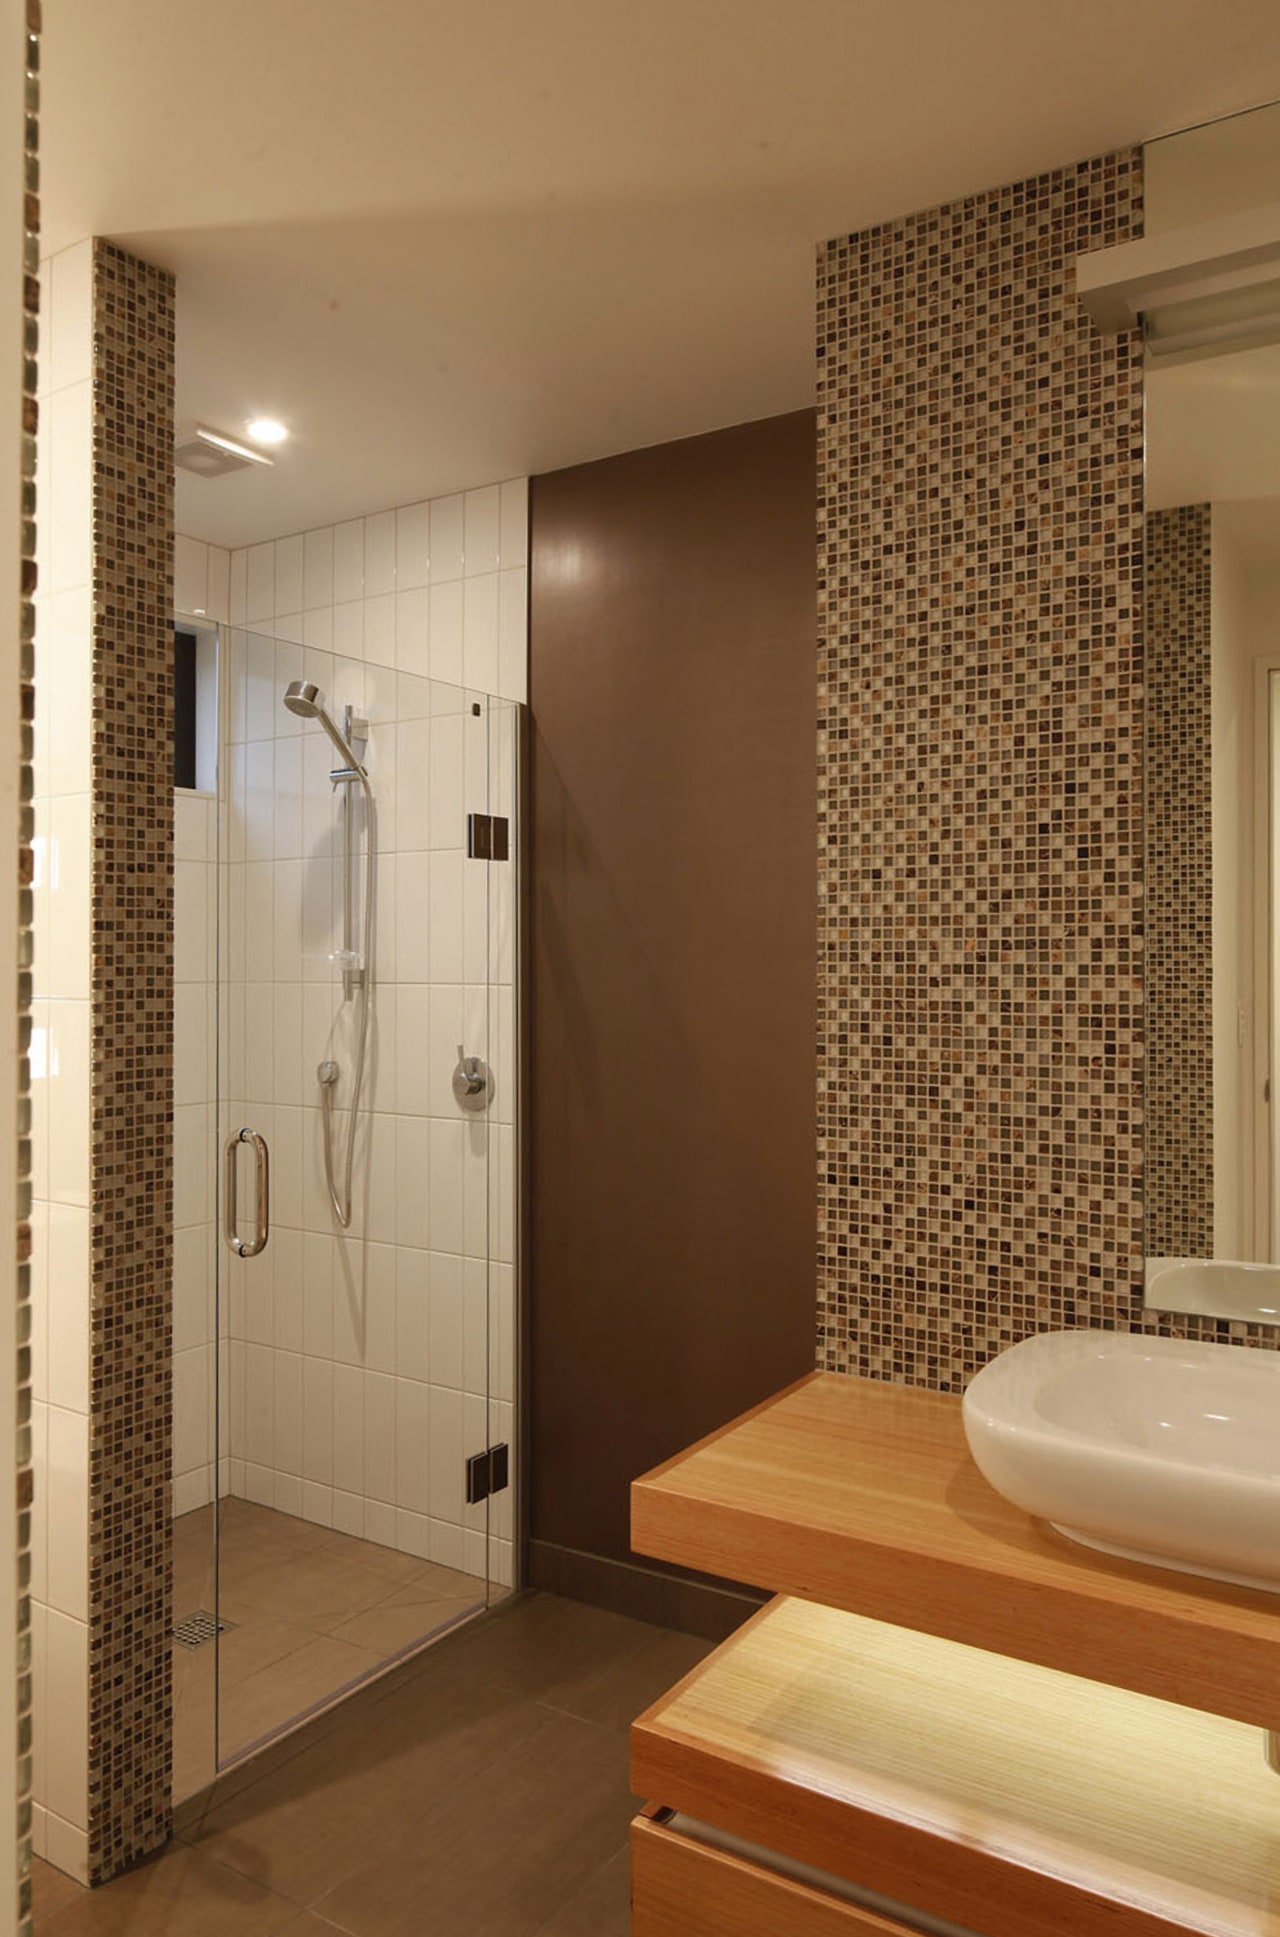 Bathroom with mosaic wall and glass shower enclosure. architecture, bathroom, floor, flooring, interior design, plumbing fixture, room, tile, wall, brown, orange